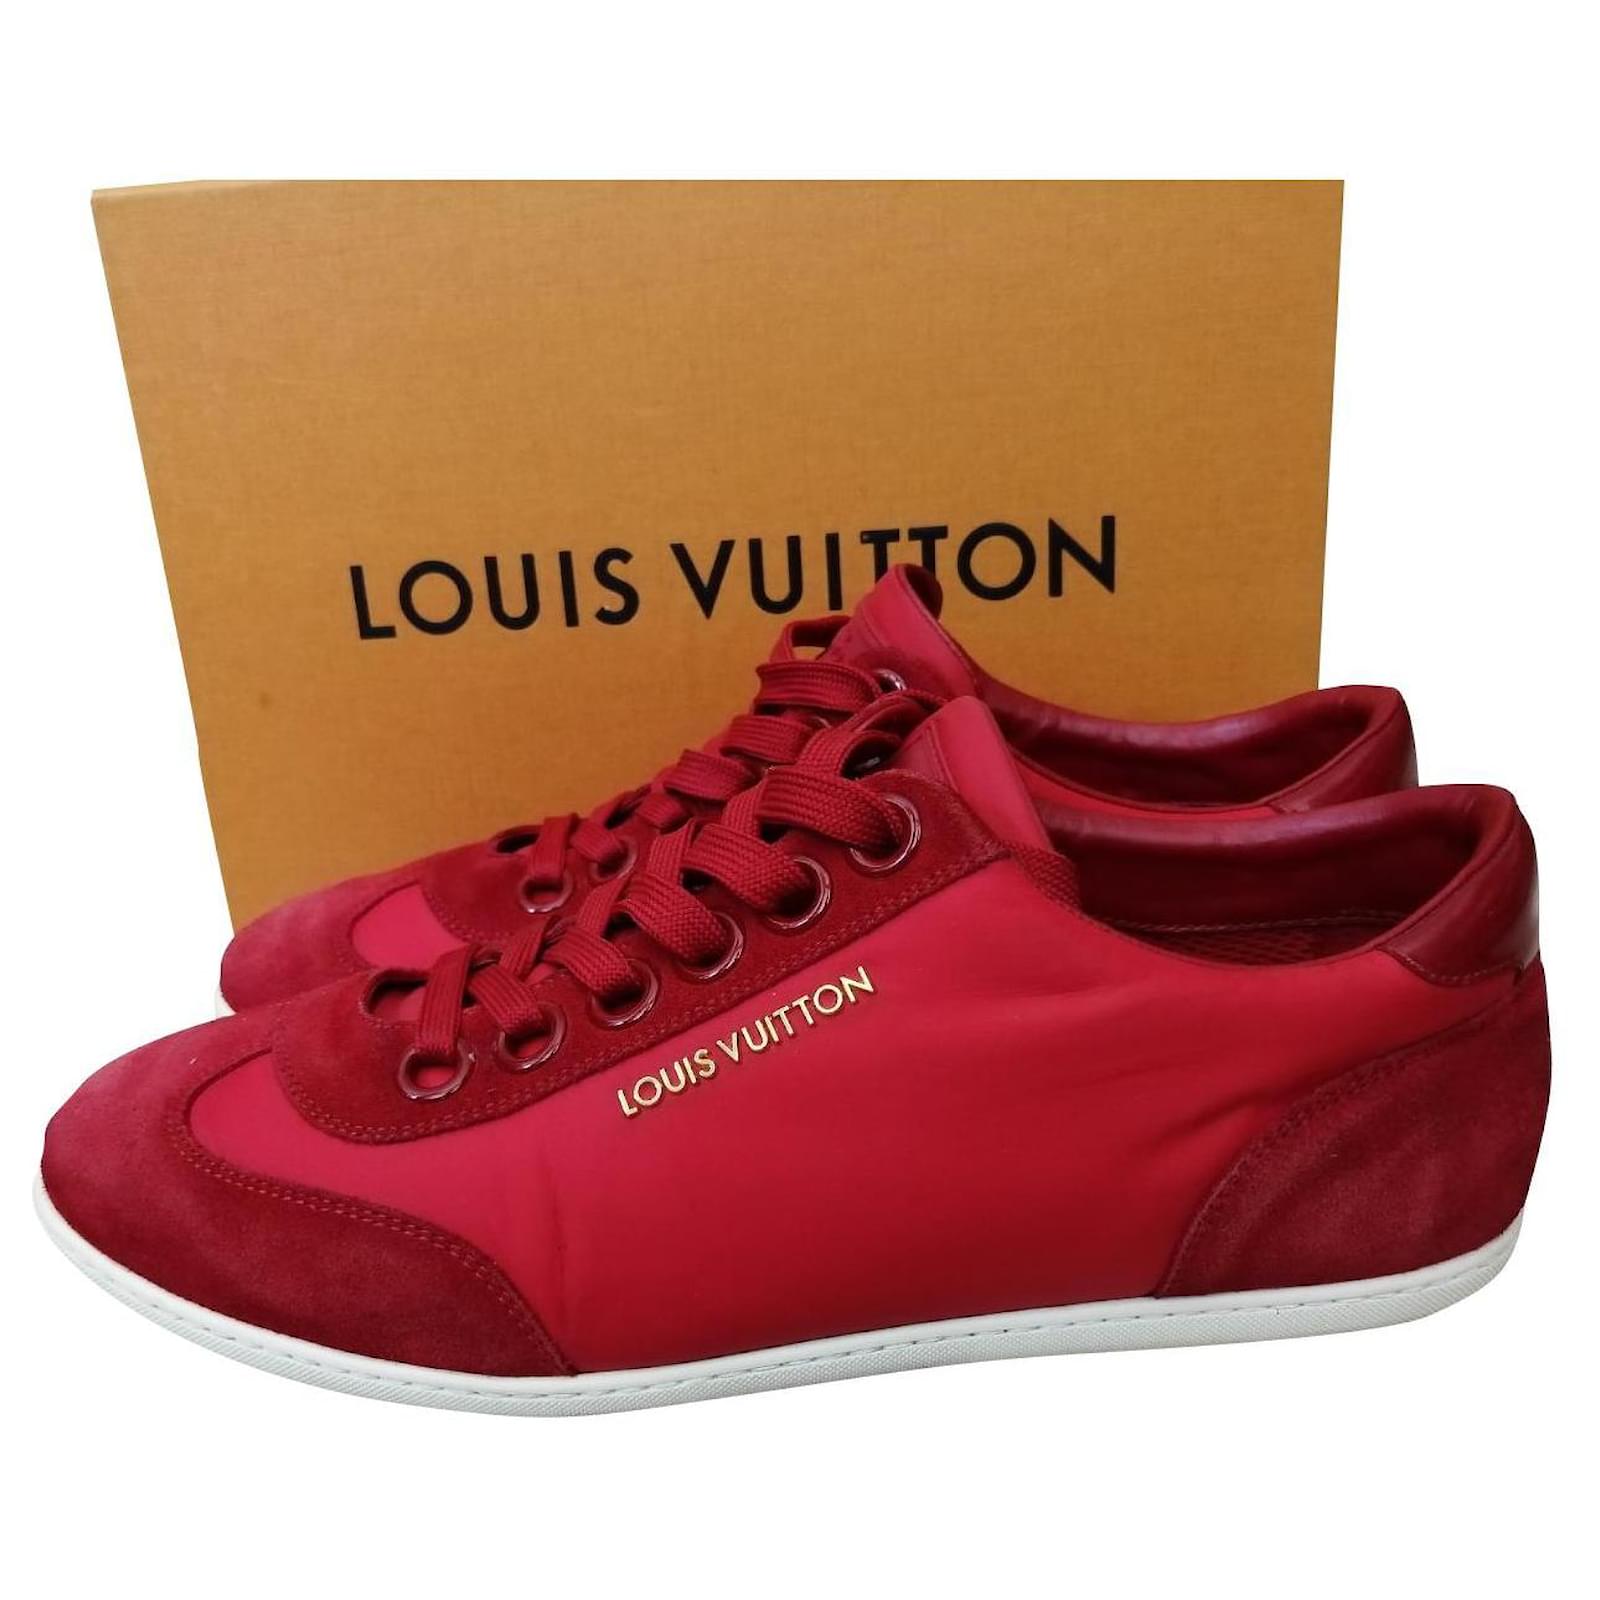 Original Louis Vuitton Sneakers